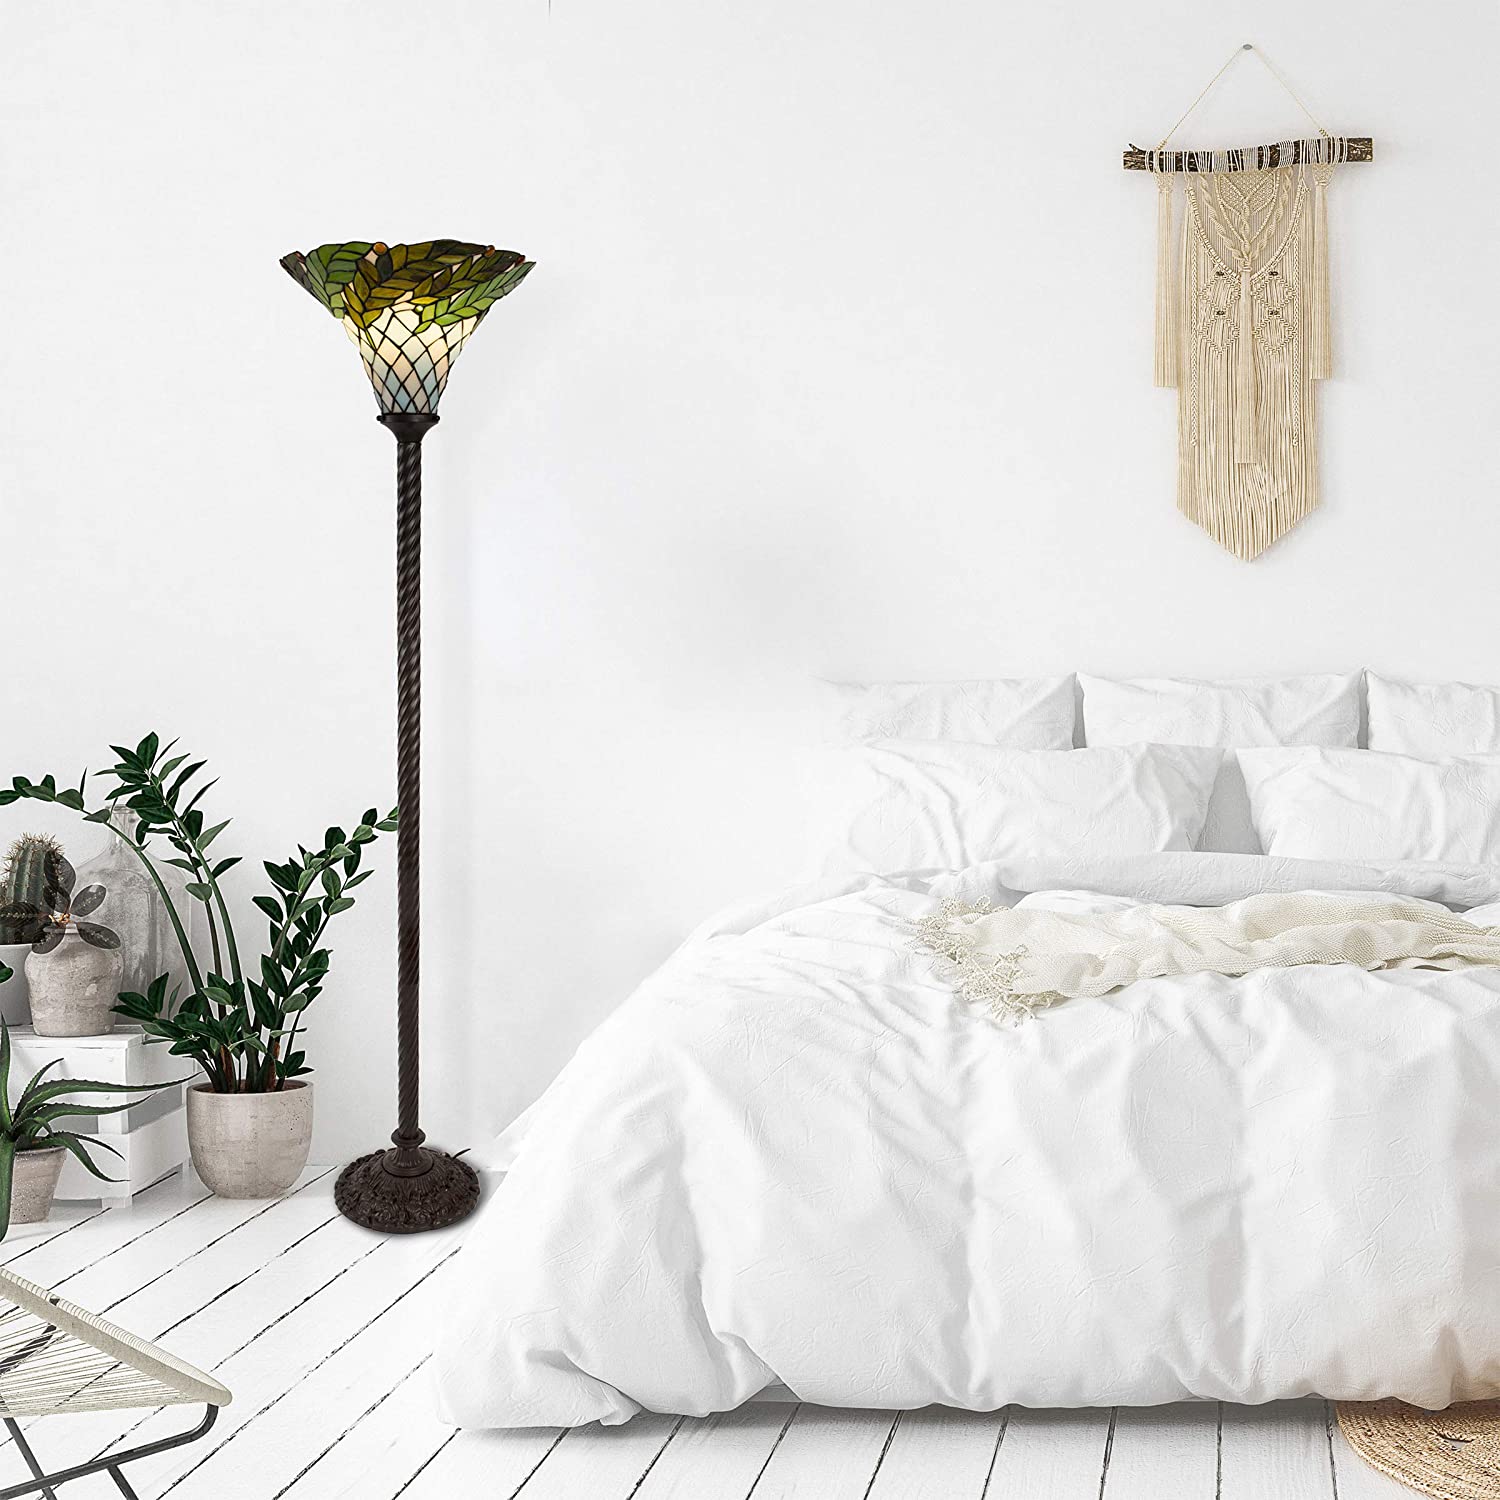 Lavish-Home-72-Tiff-8-Tiffany-Style-Floor-Lamp 15 Unique Artistic Floor Lamps to Light Your Bedroom